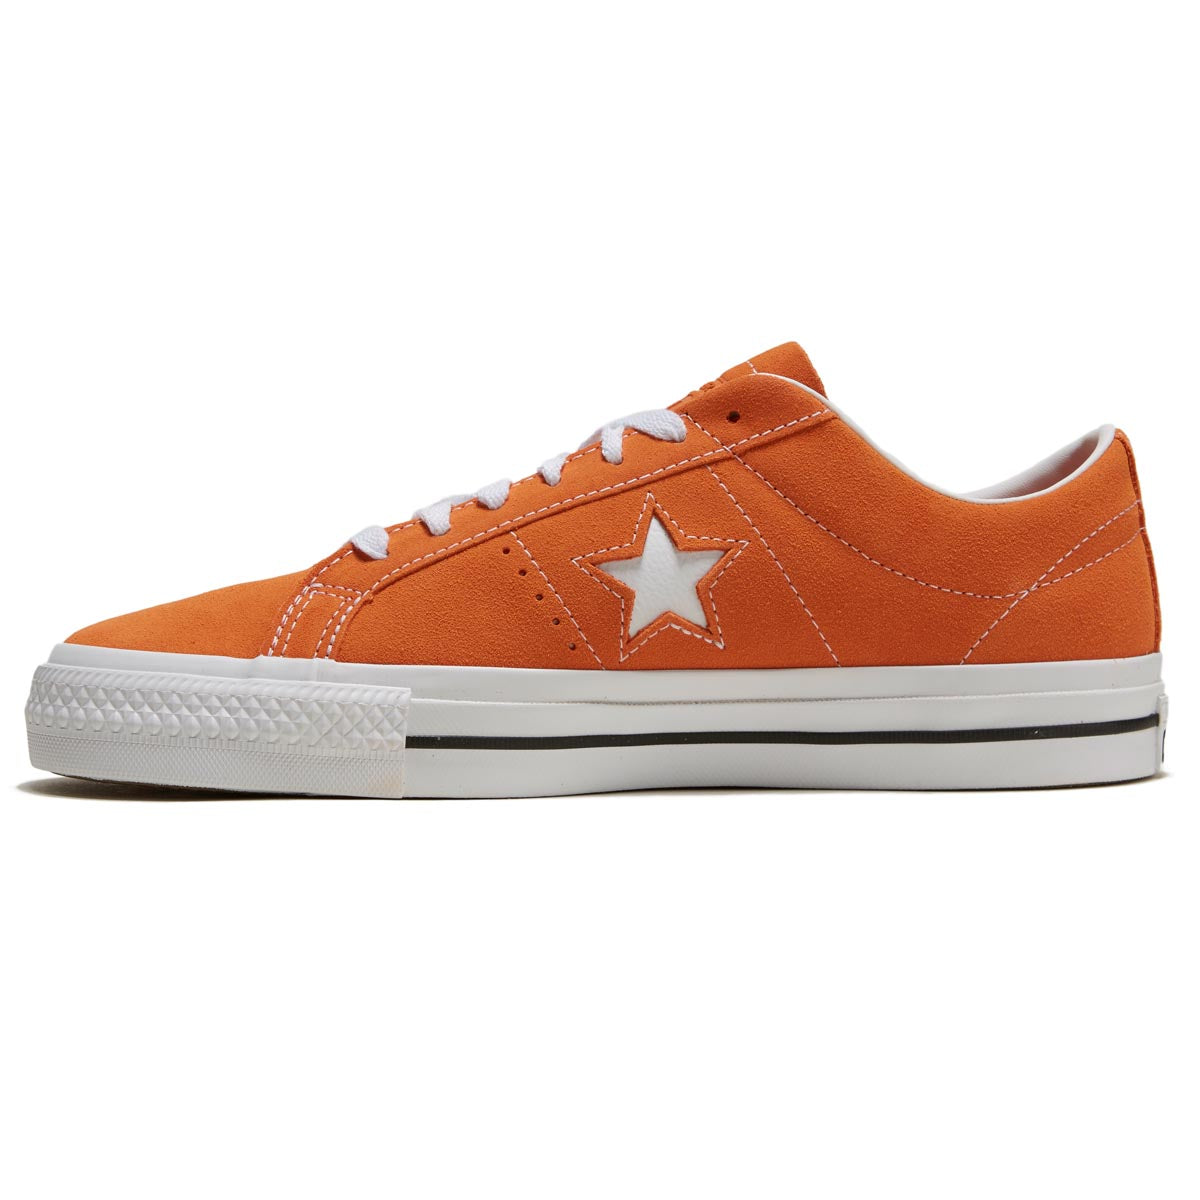 Converse One Star Pro Ox Shoes - Orange/White/Black image 2